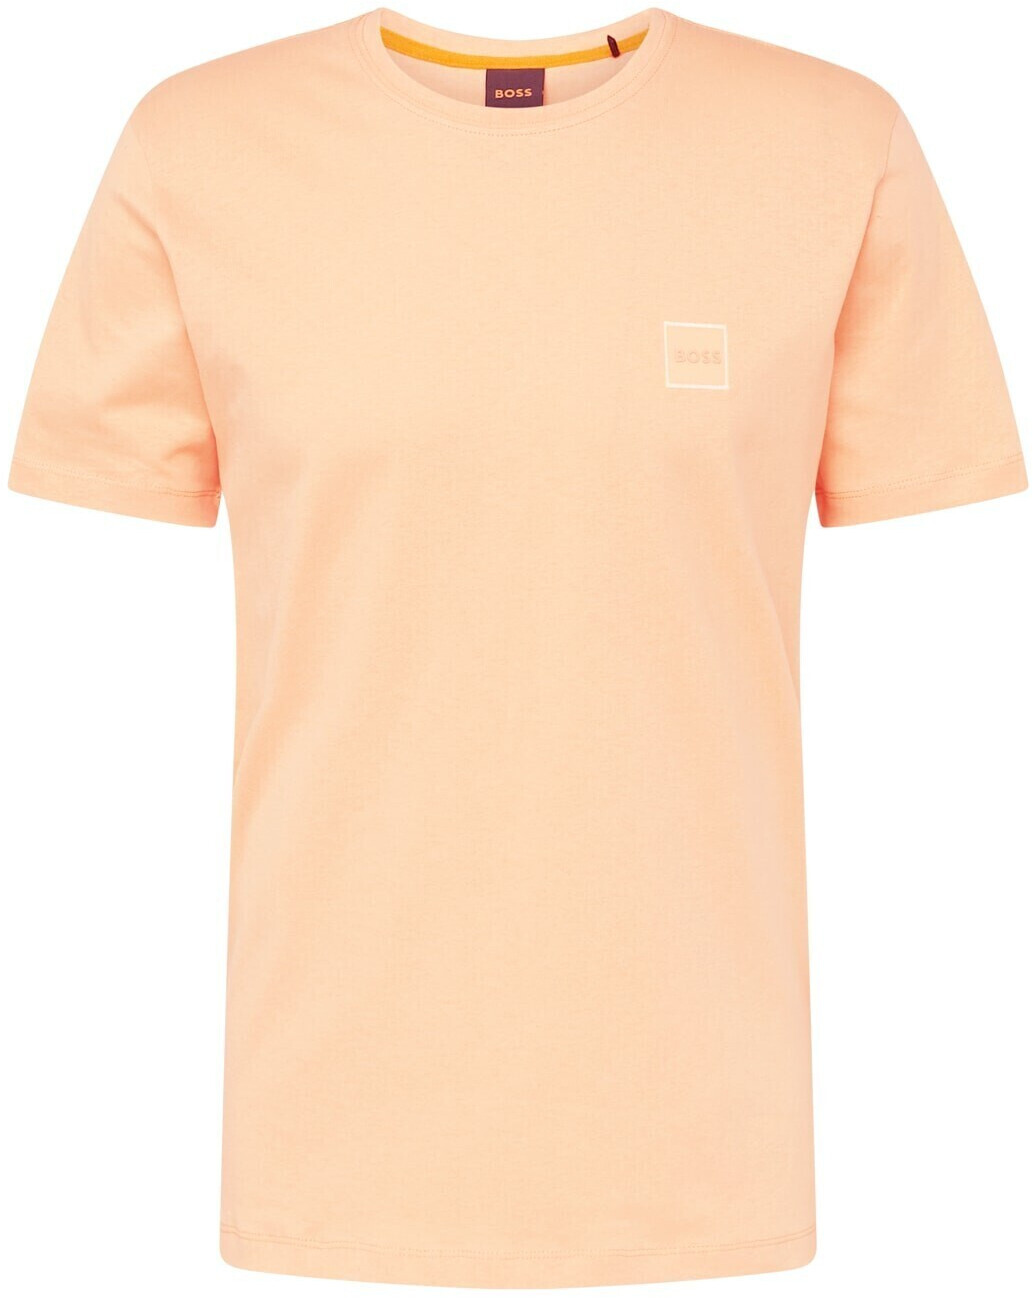 Buy Hugo Boss Tales Short Sleeve T-Shirt (50472584-833) orange from £24.99  (Today) – Best Deals on